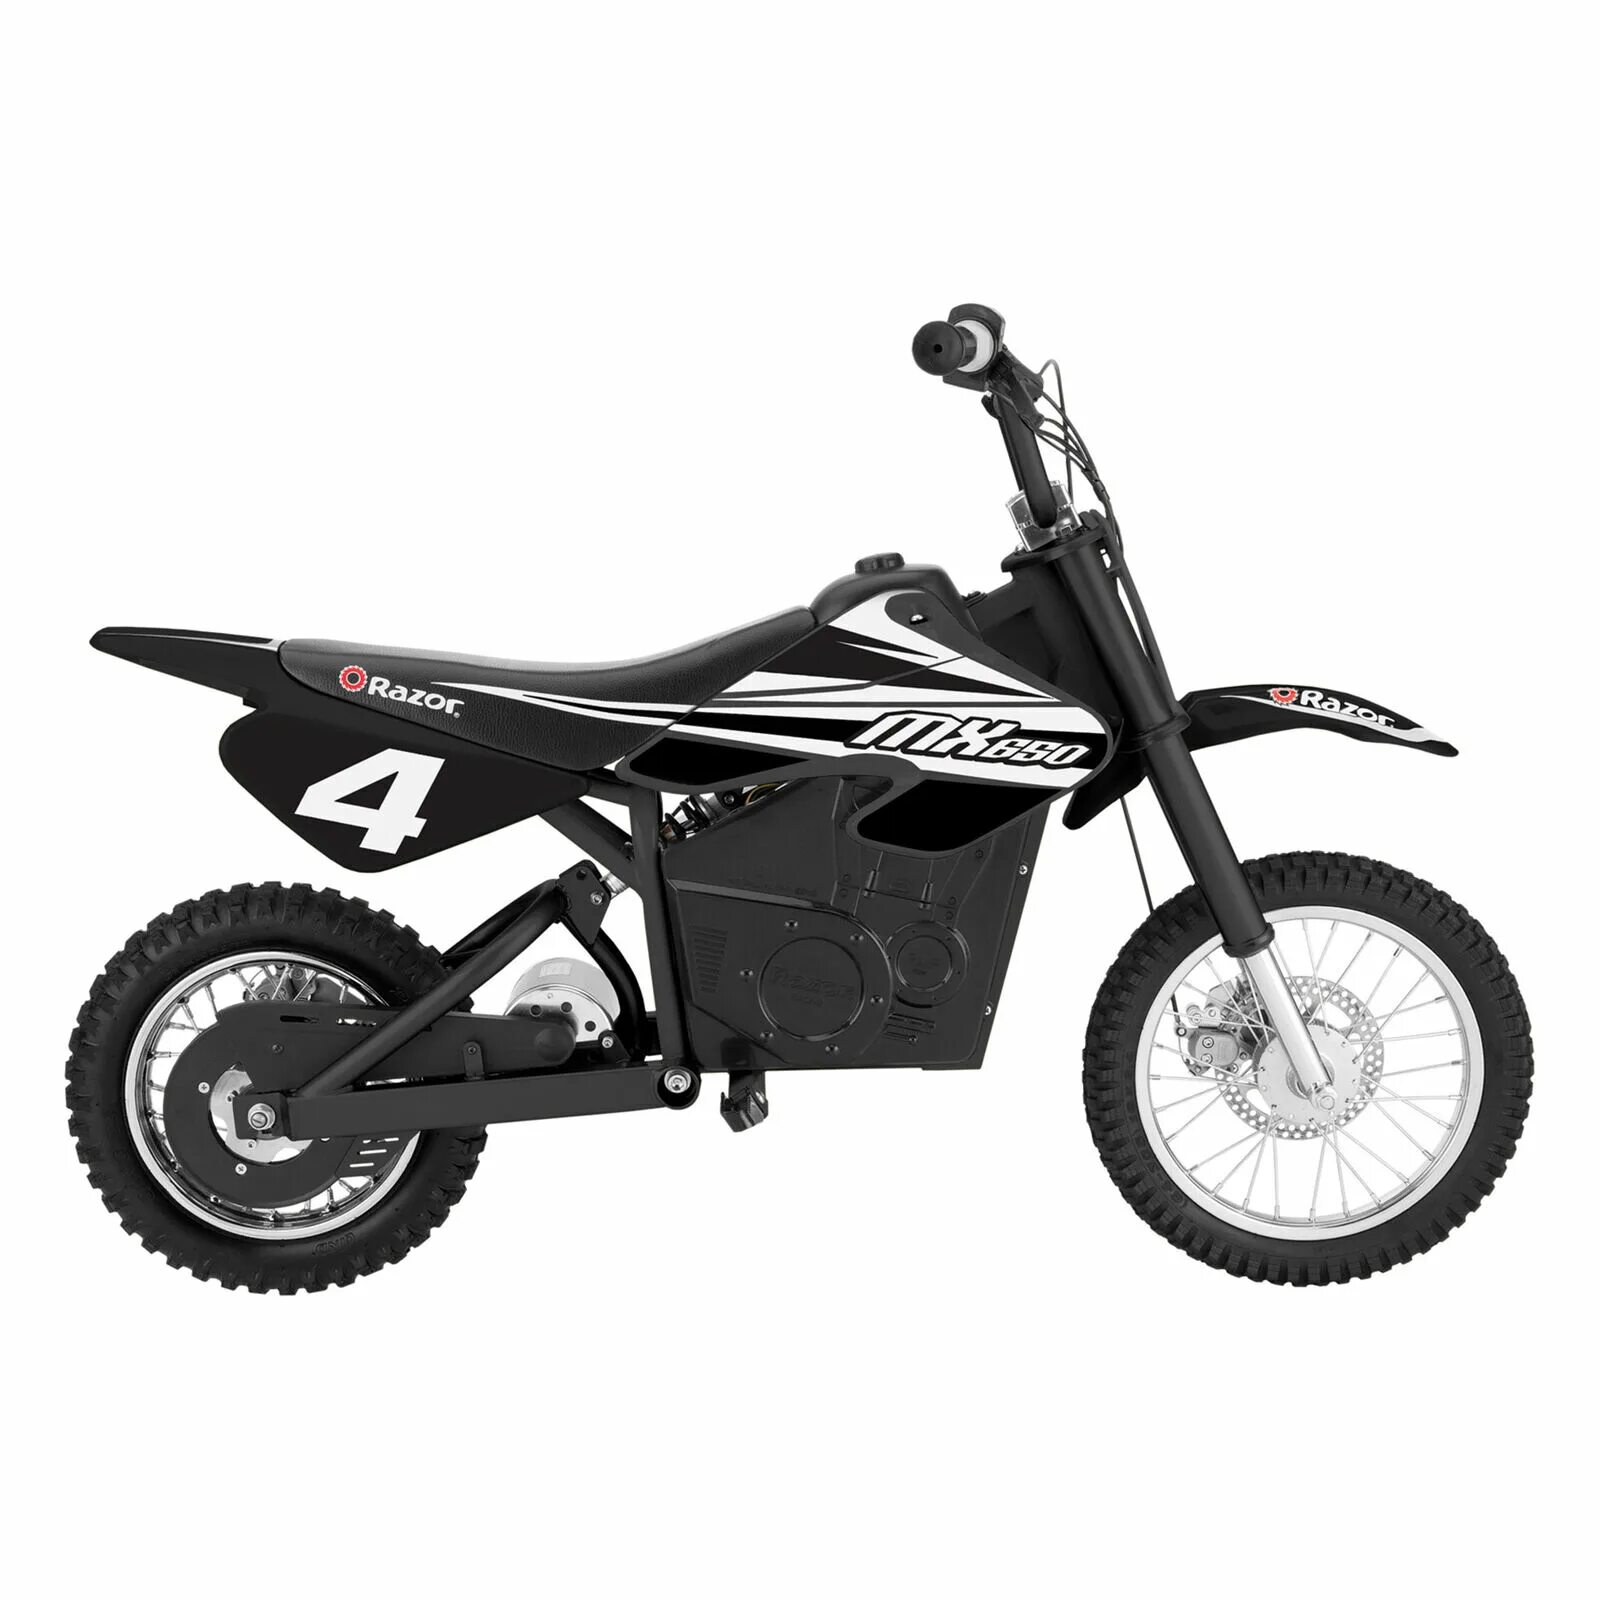 Bike 17. Электробайк Razor mx650. Razor мотоцикл mx650. Razor mx650 Dirt Rocket. Razor mx650 Dirt Rocket Electric Motocross Bike.